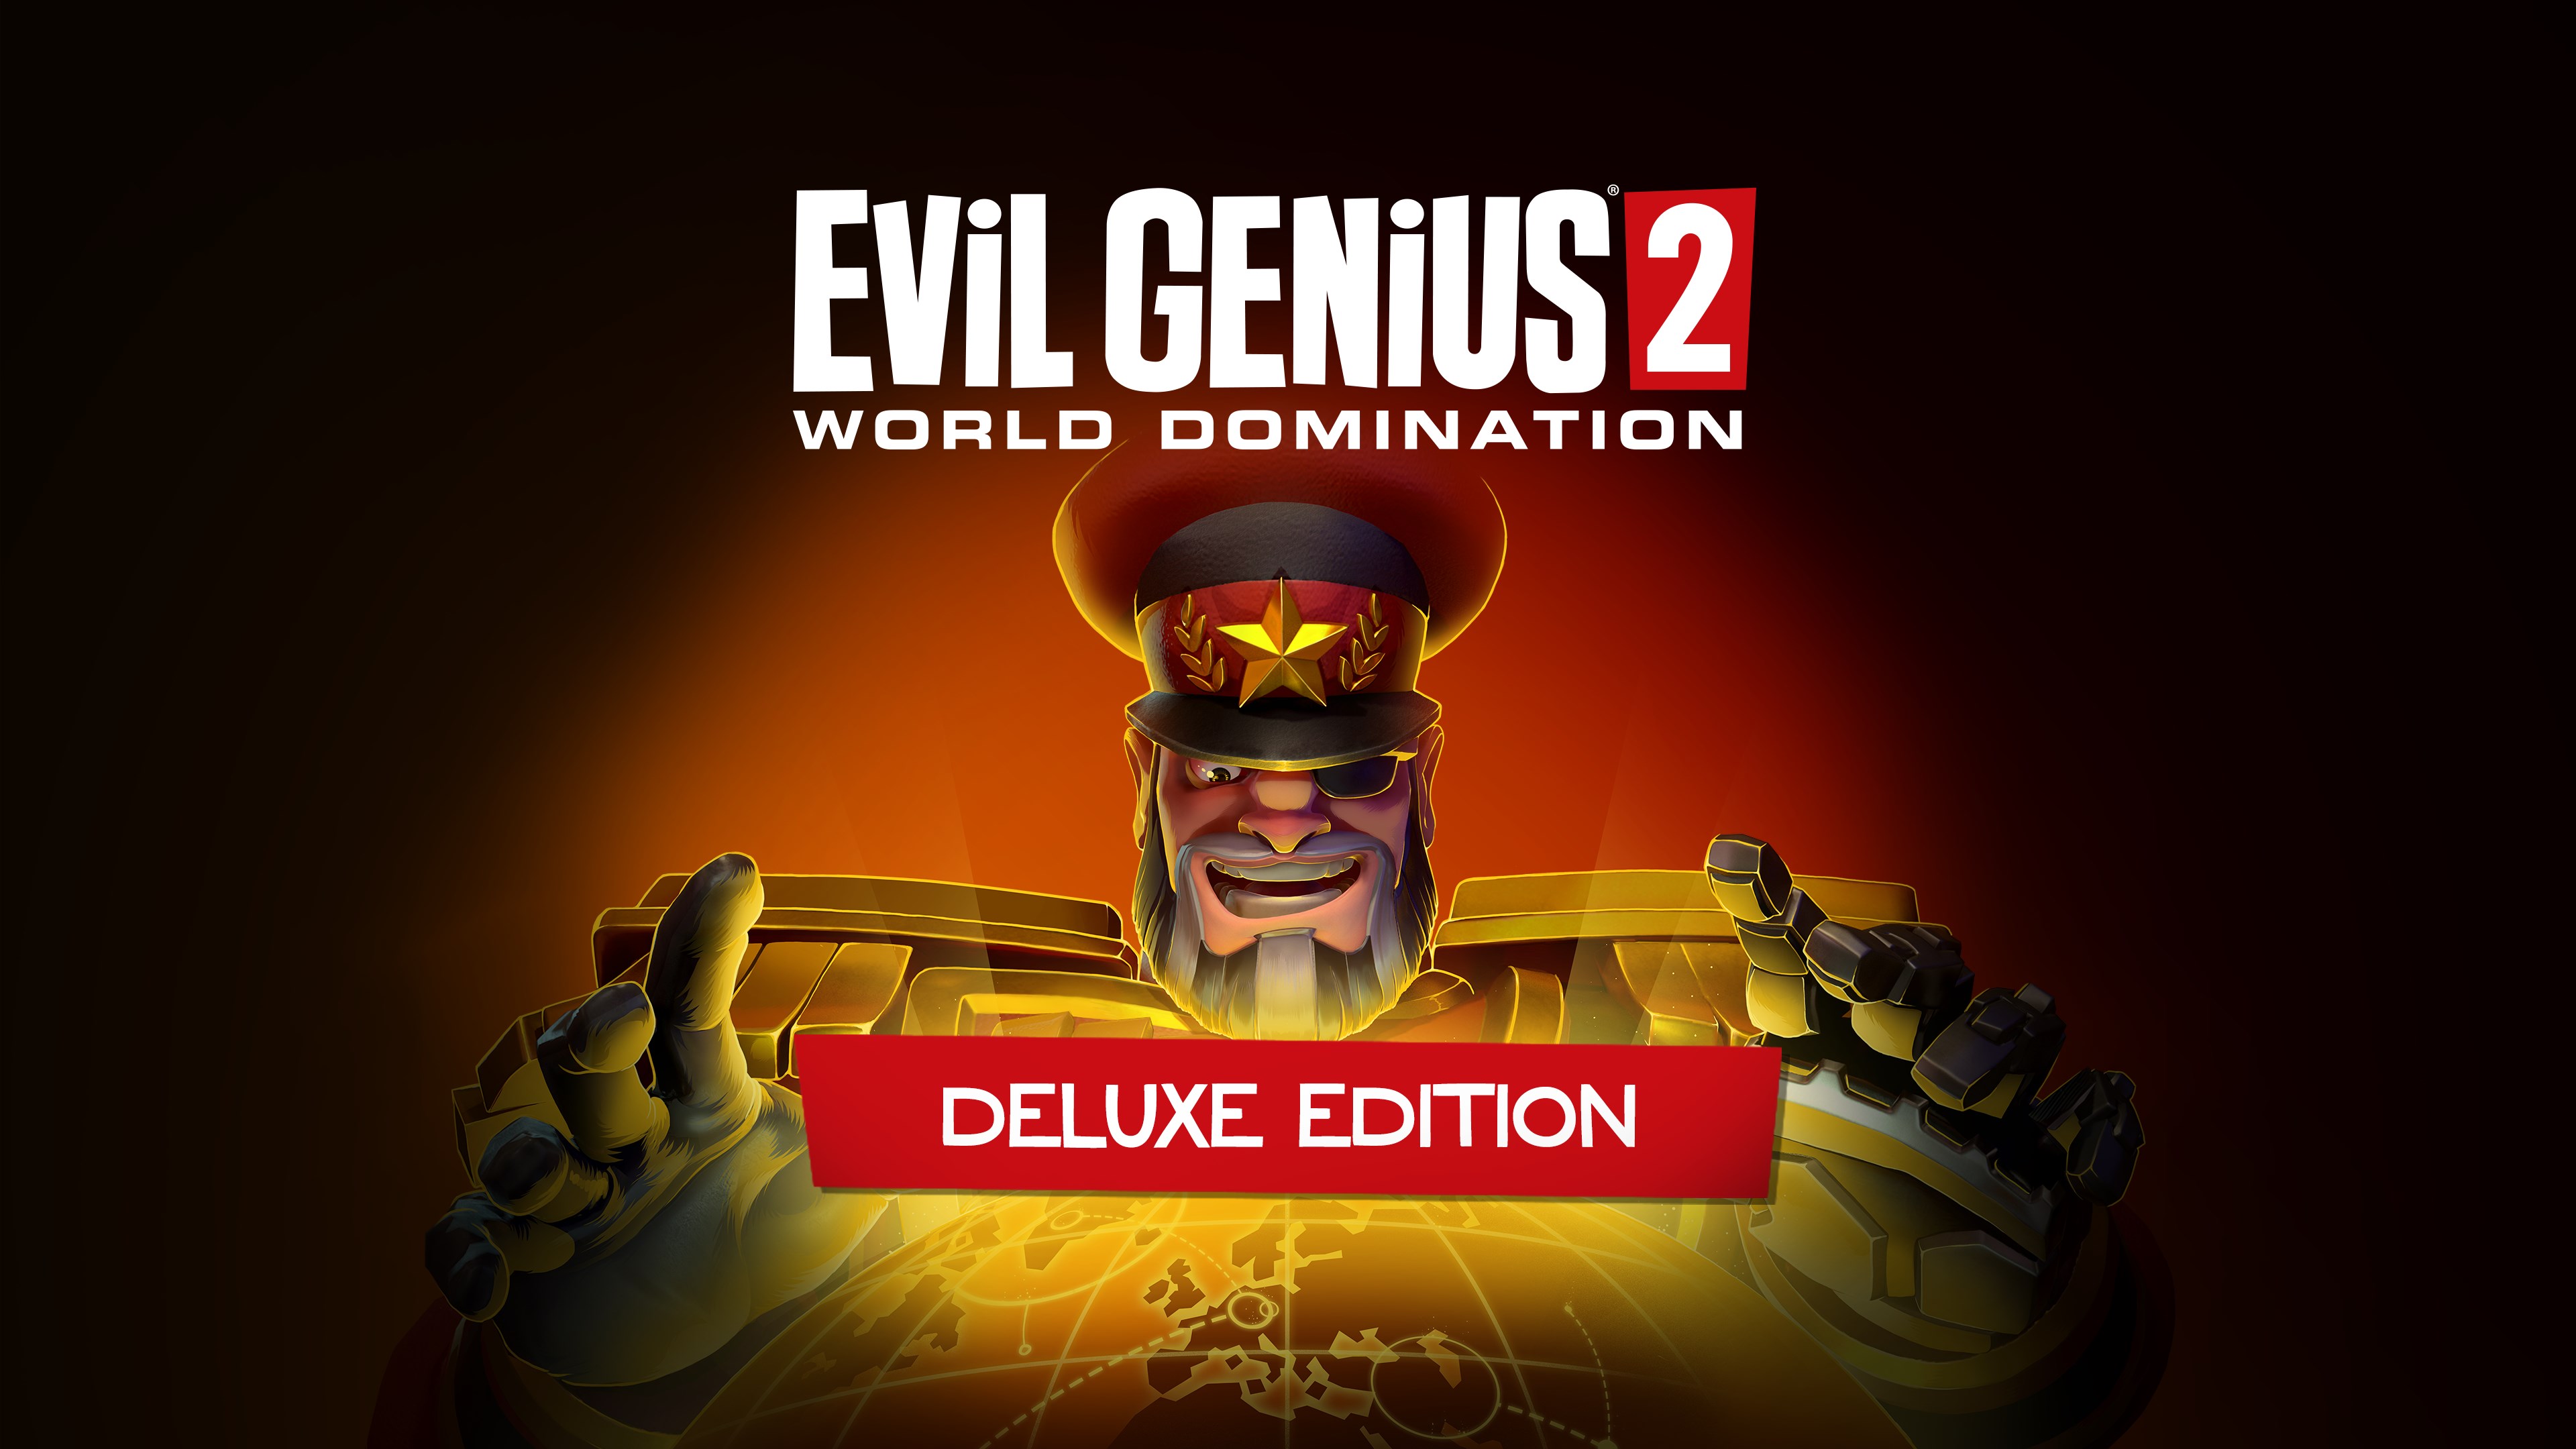 Find the best laptops for Evil Genius 2: World Domination